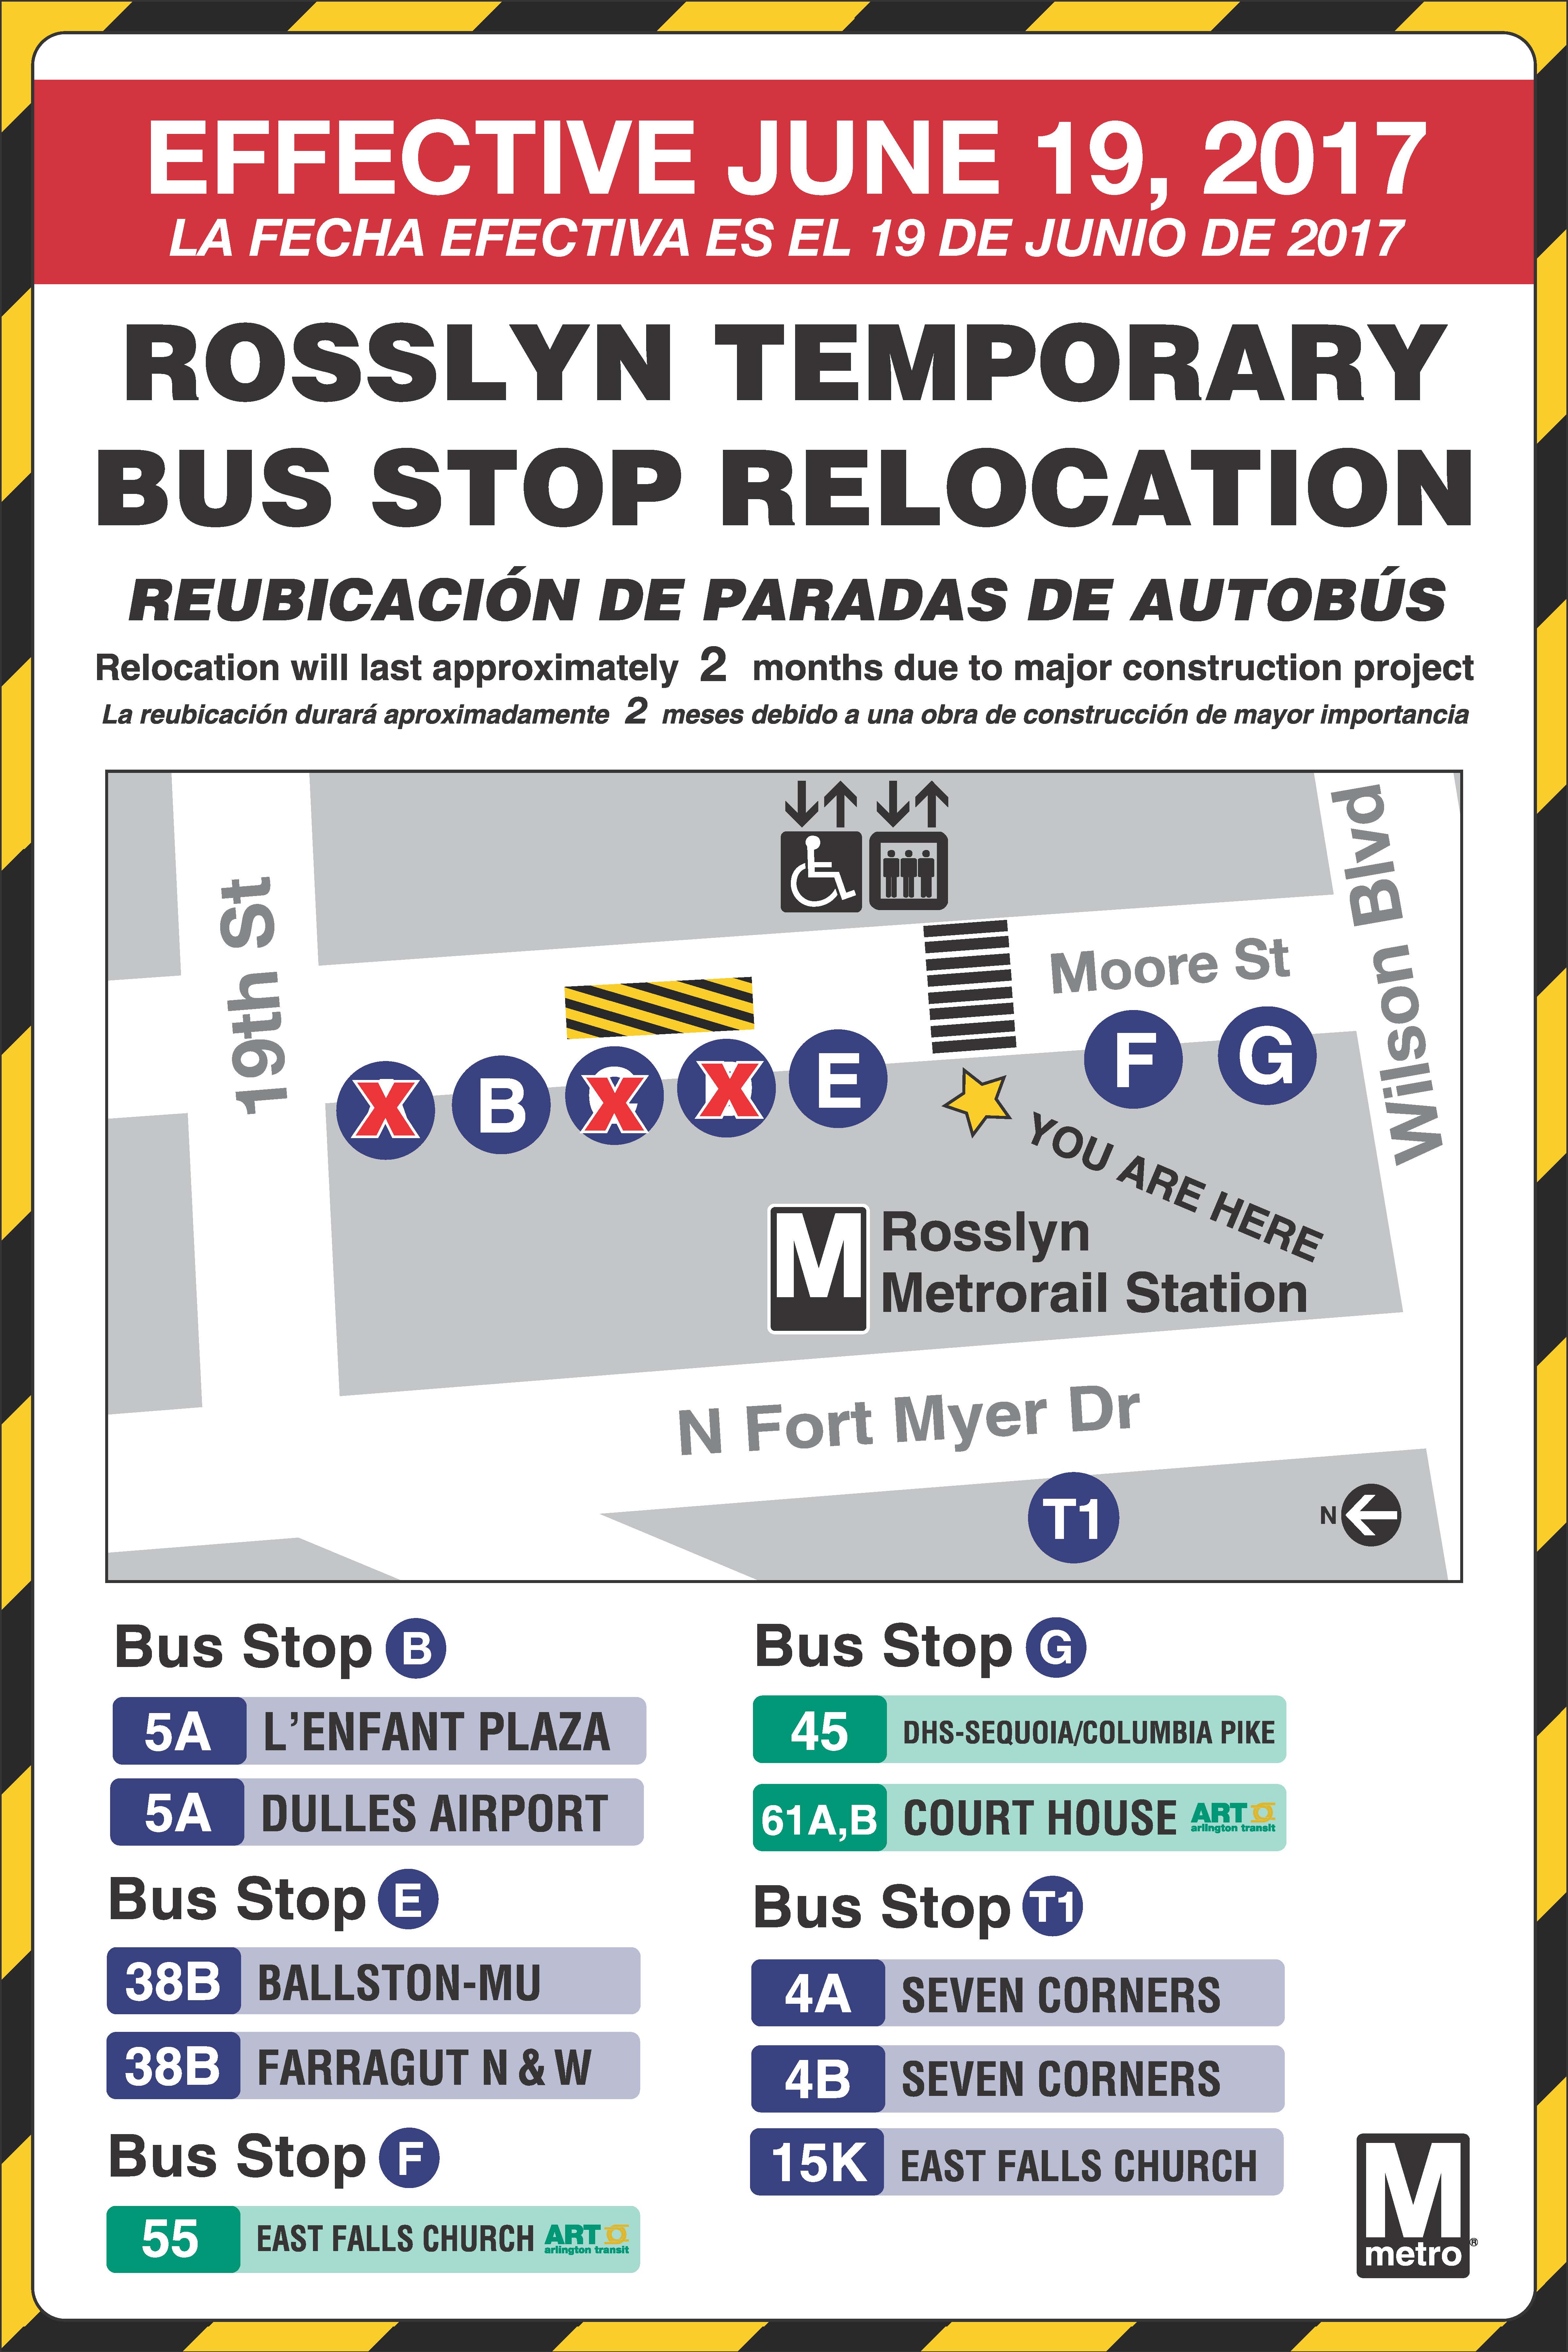 Rosslyn Bus Bays Relocating Update June 19